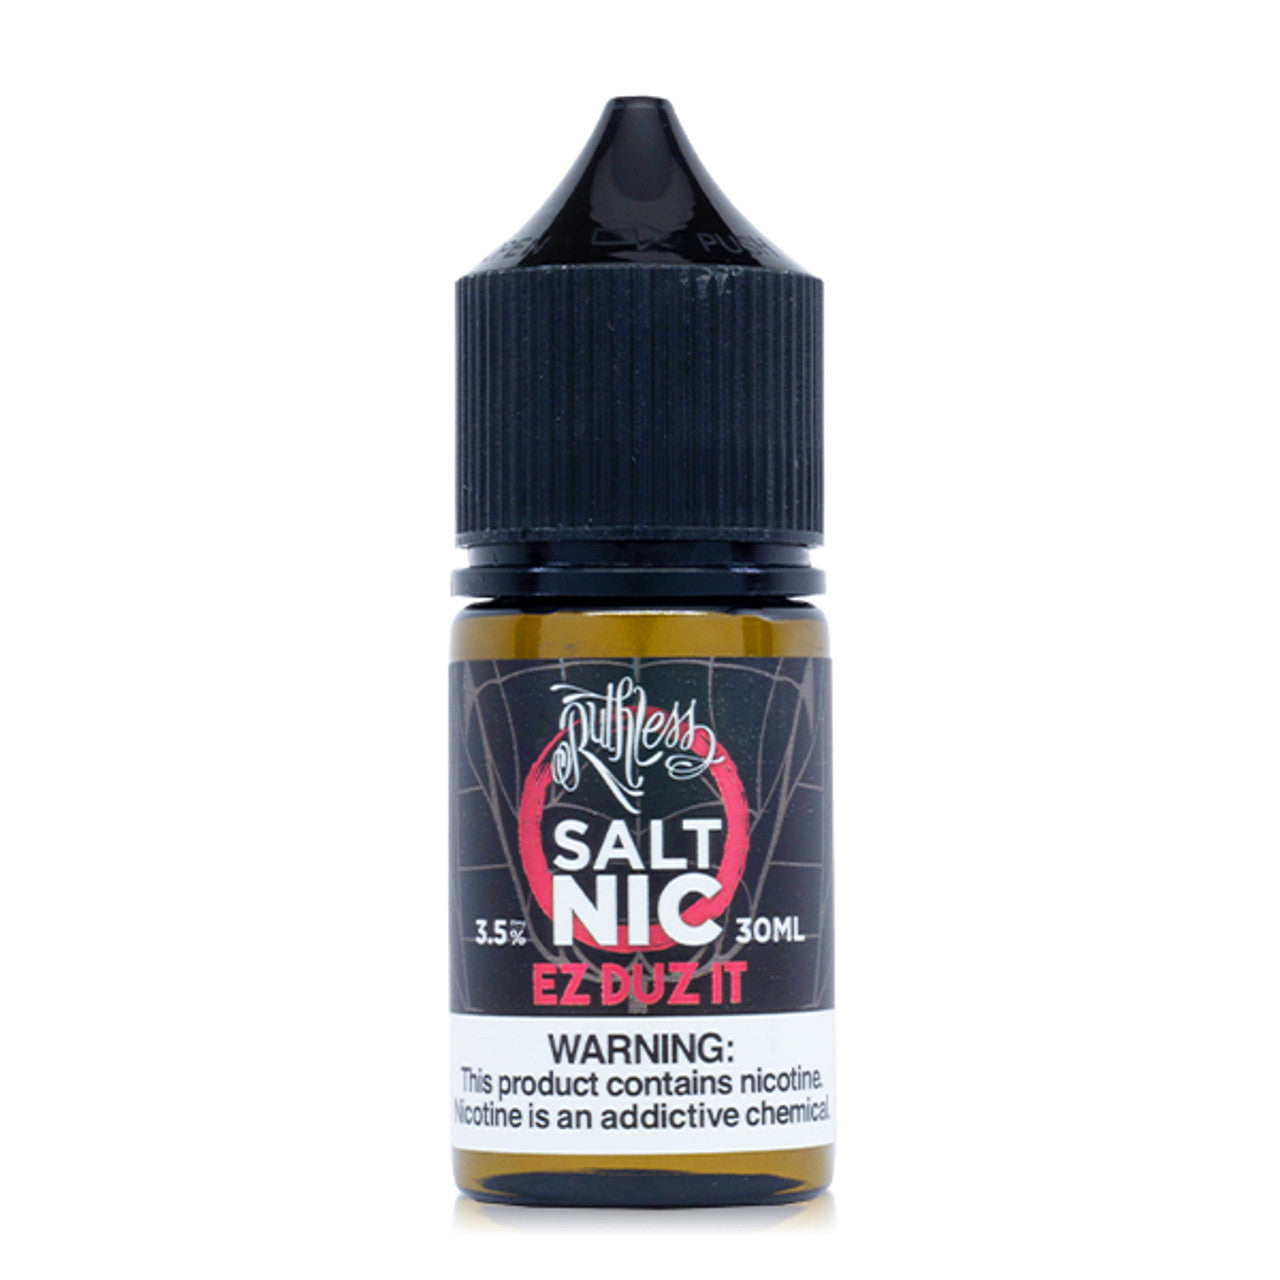 Ruthless Salt Series E-Liquid 30mL (Salt Nic) Ez Duz It